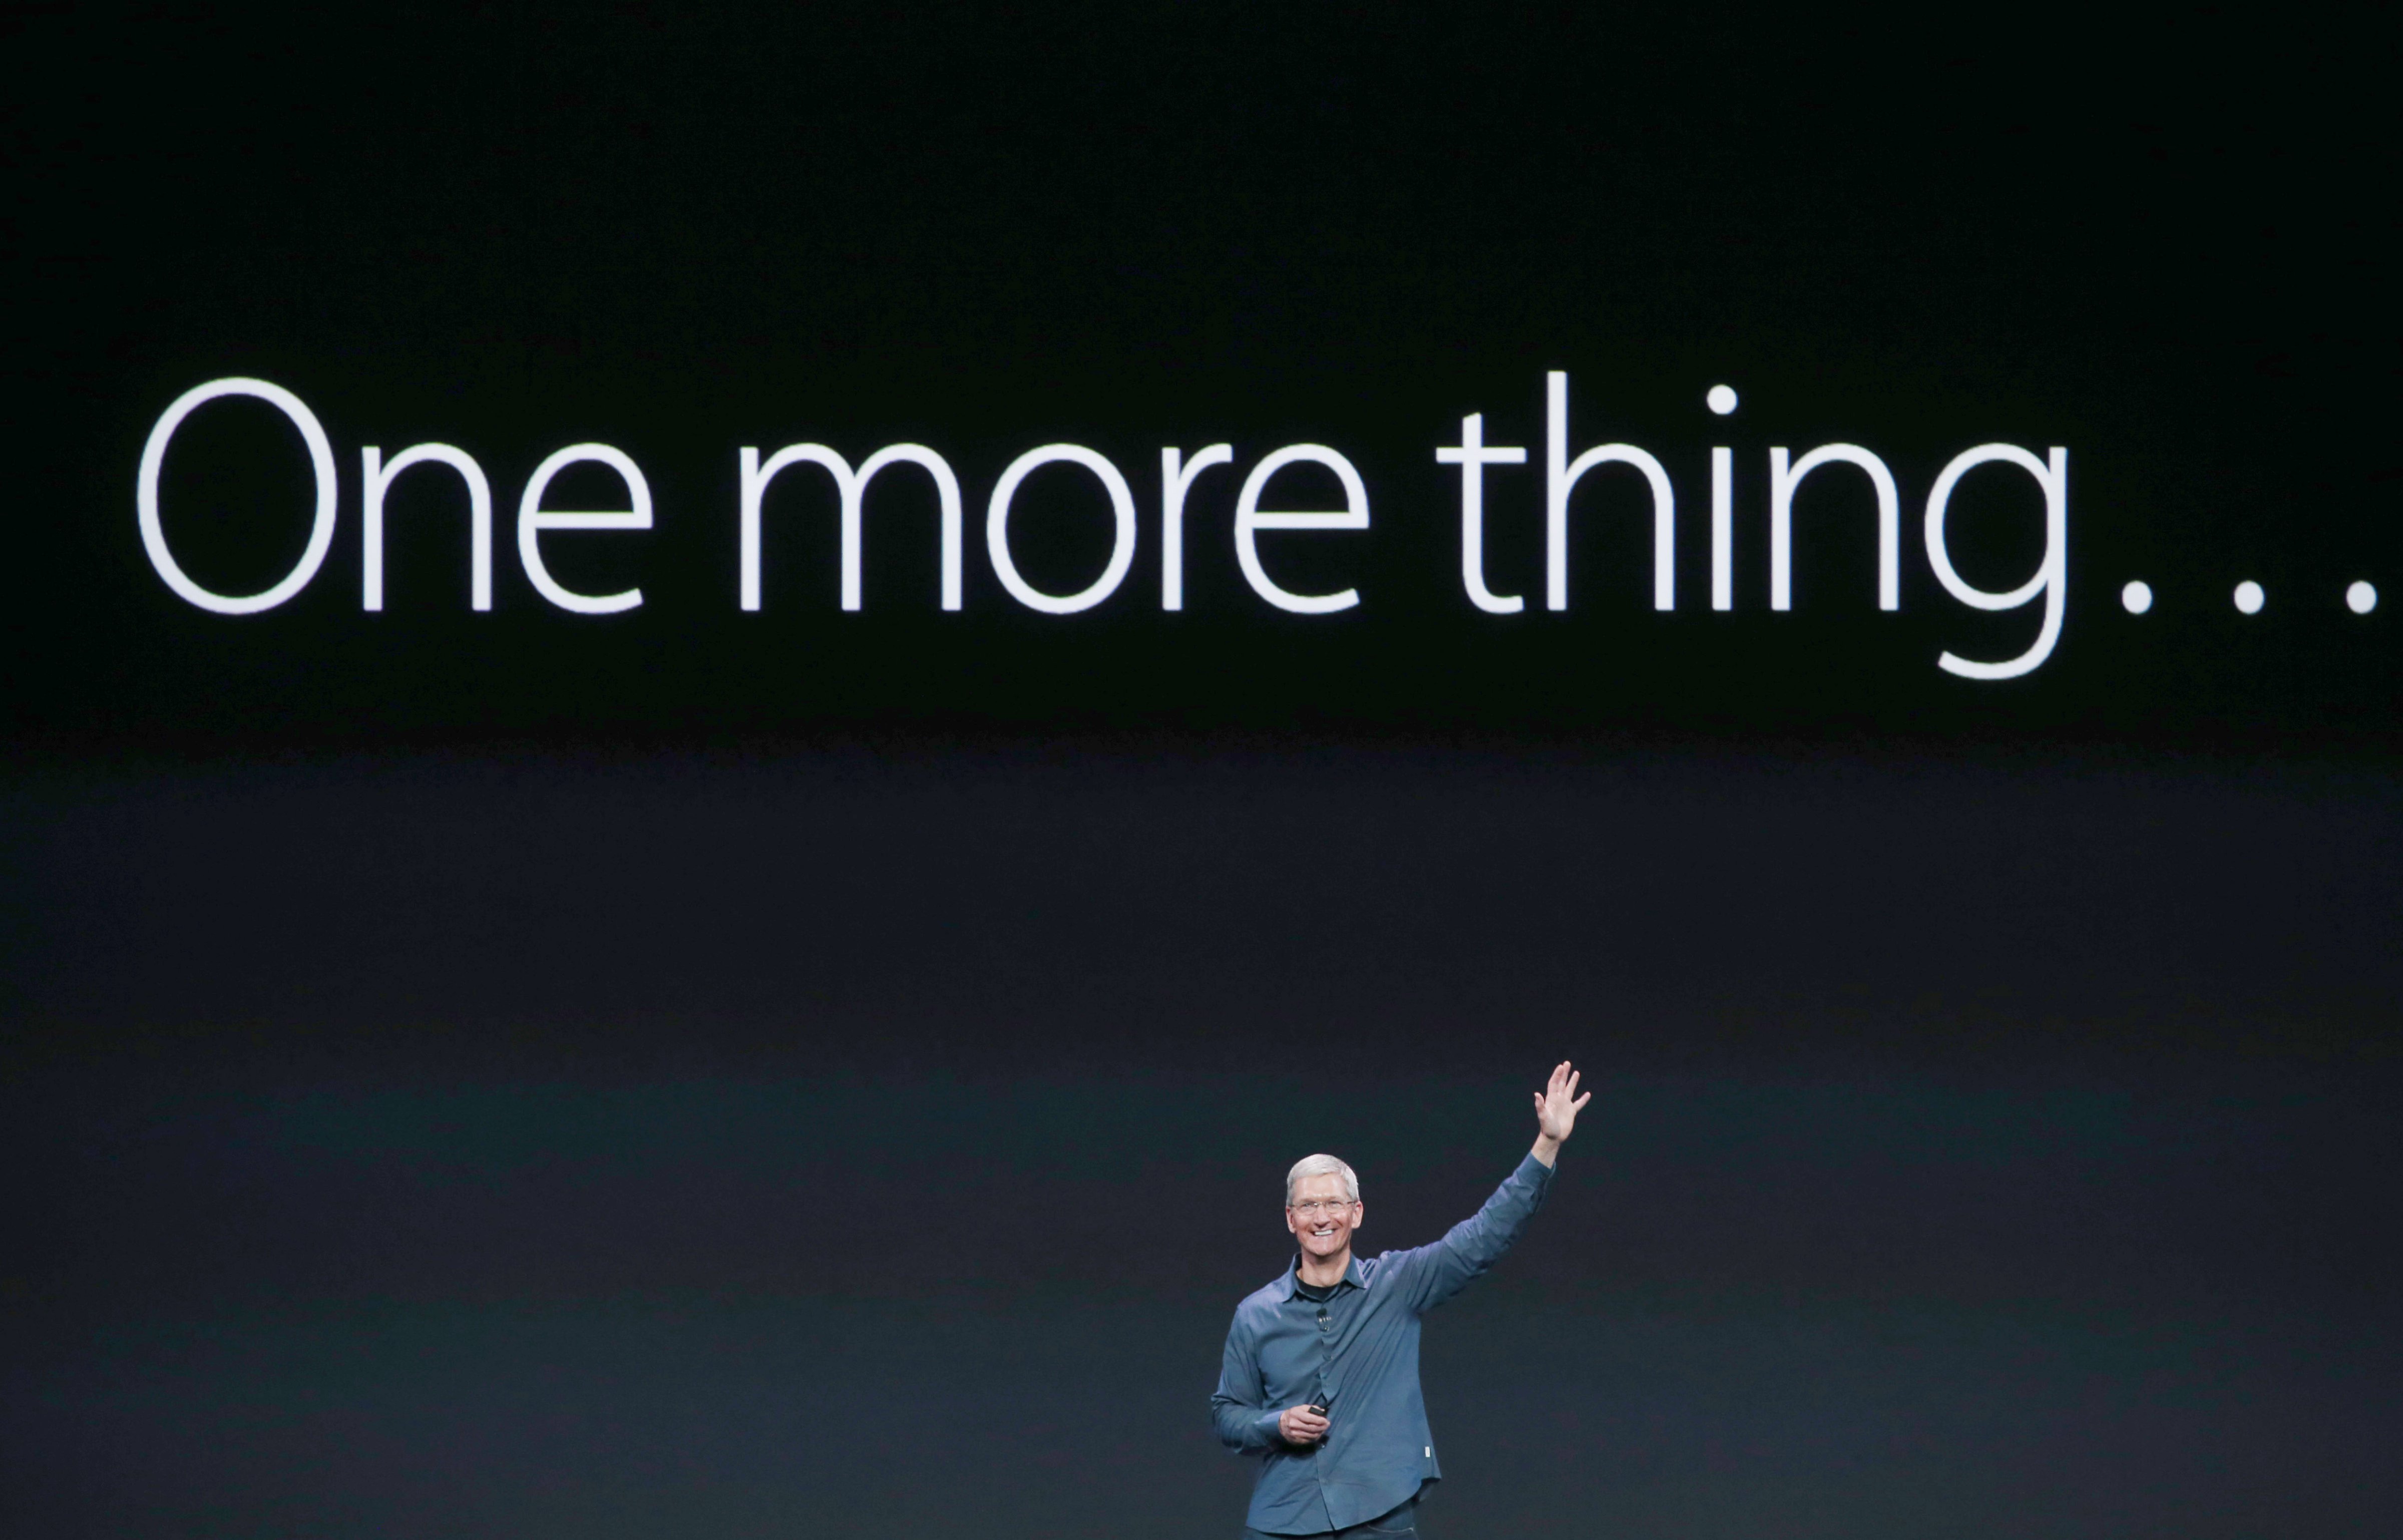 Apple Unveils iPhone 6